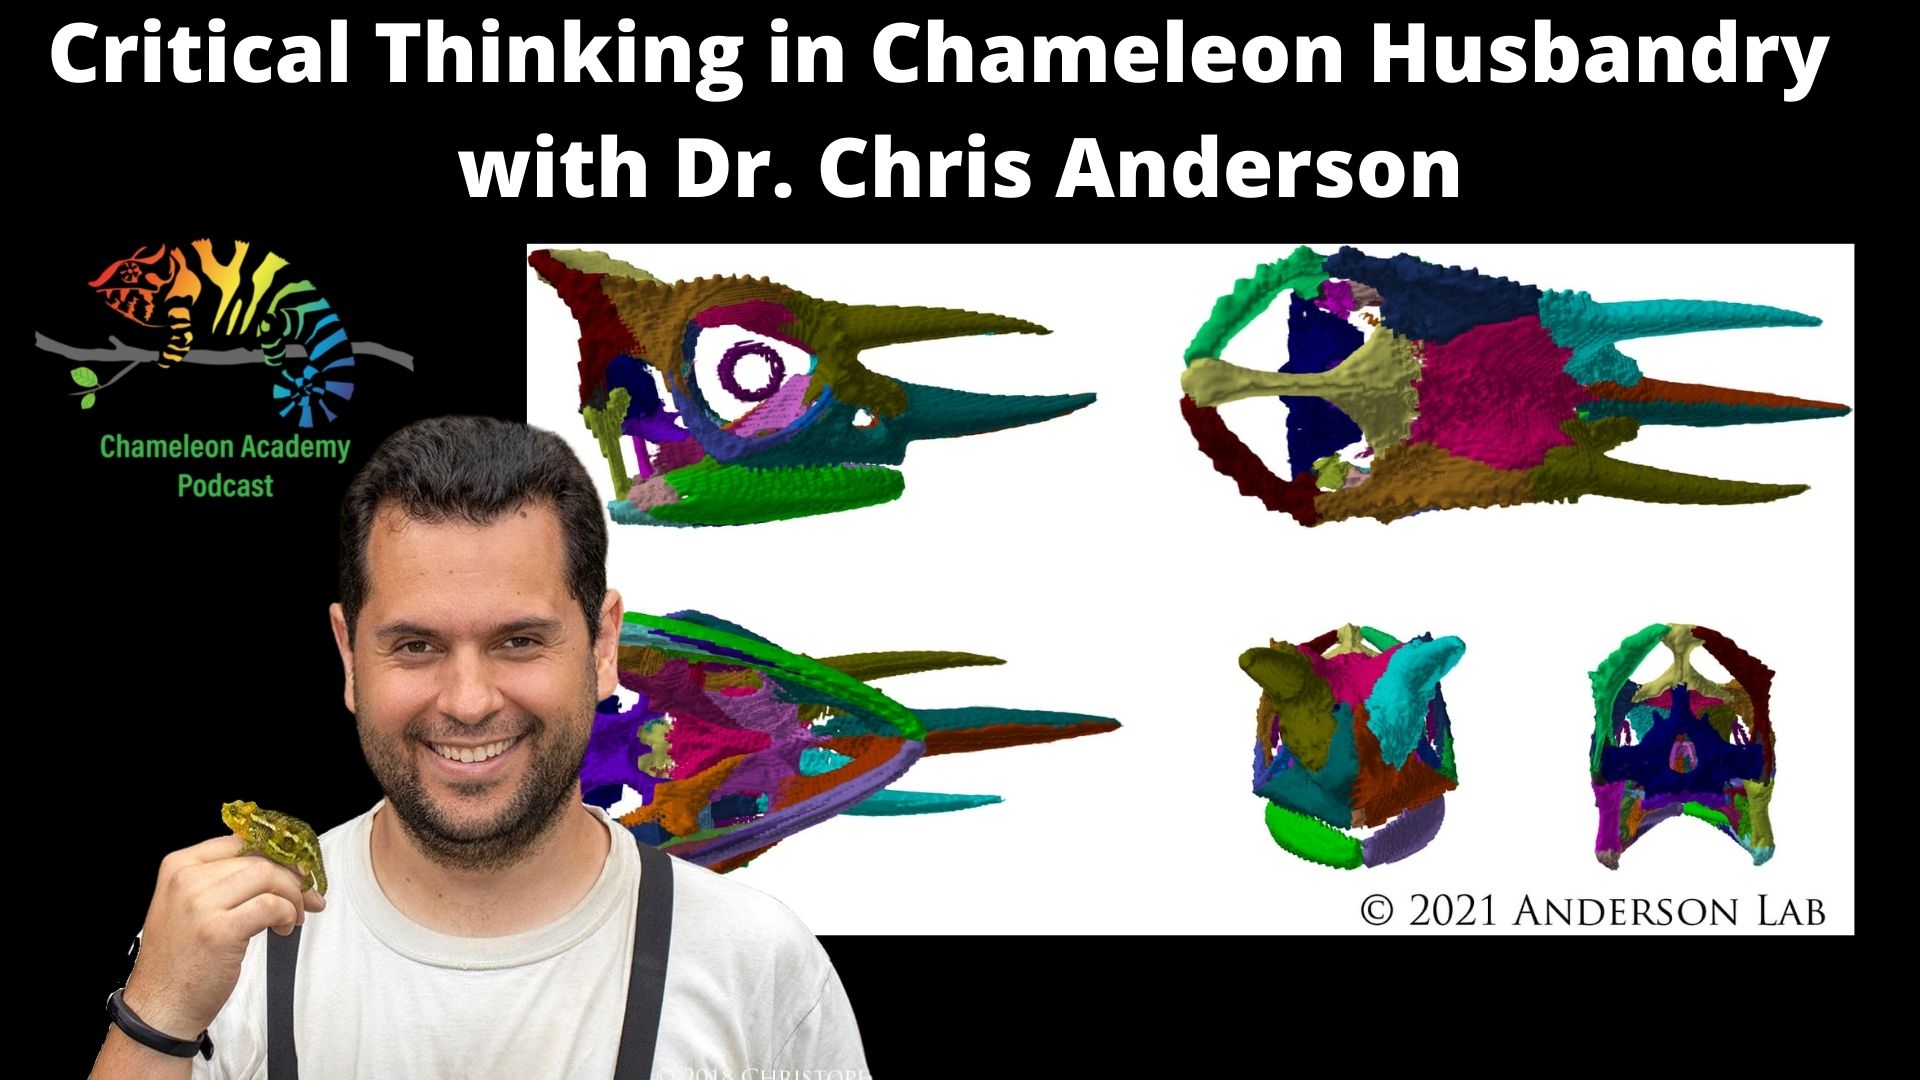 Critical Thinking in chameleon husbandry